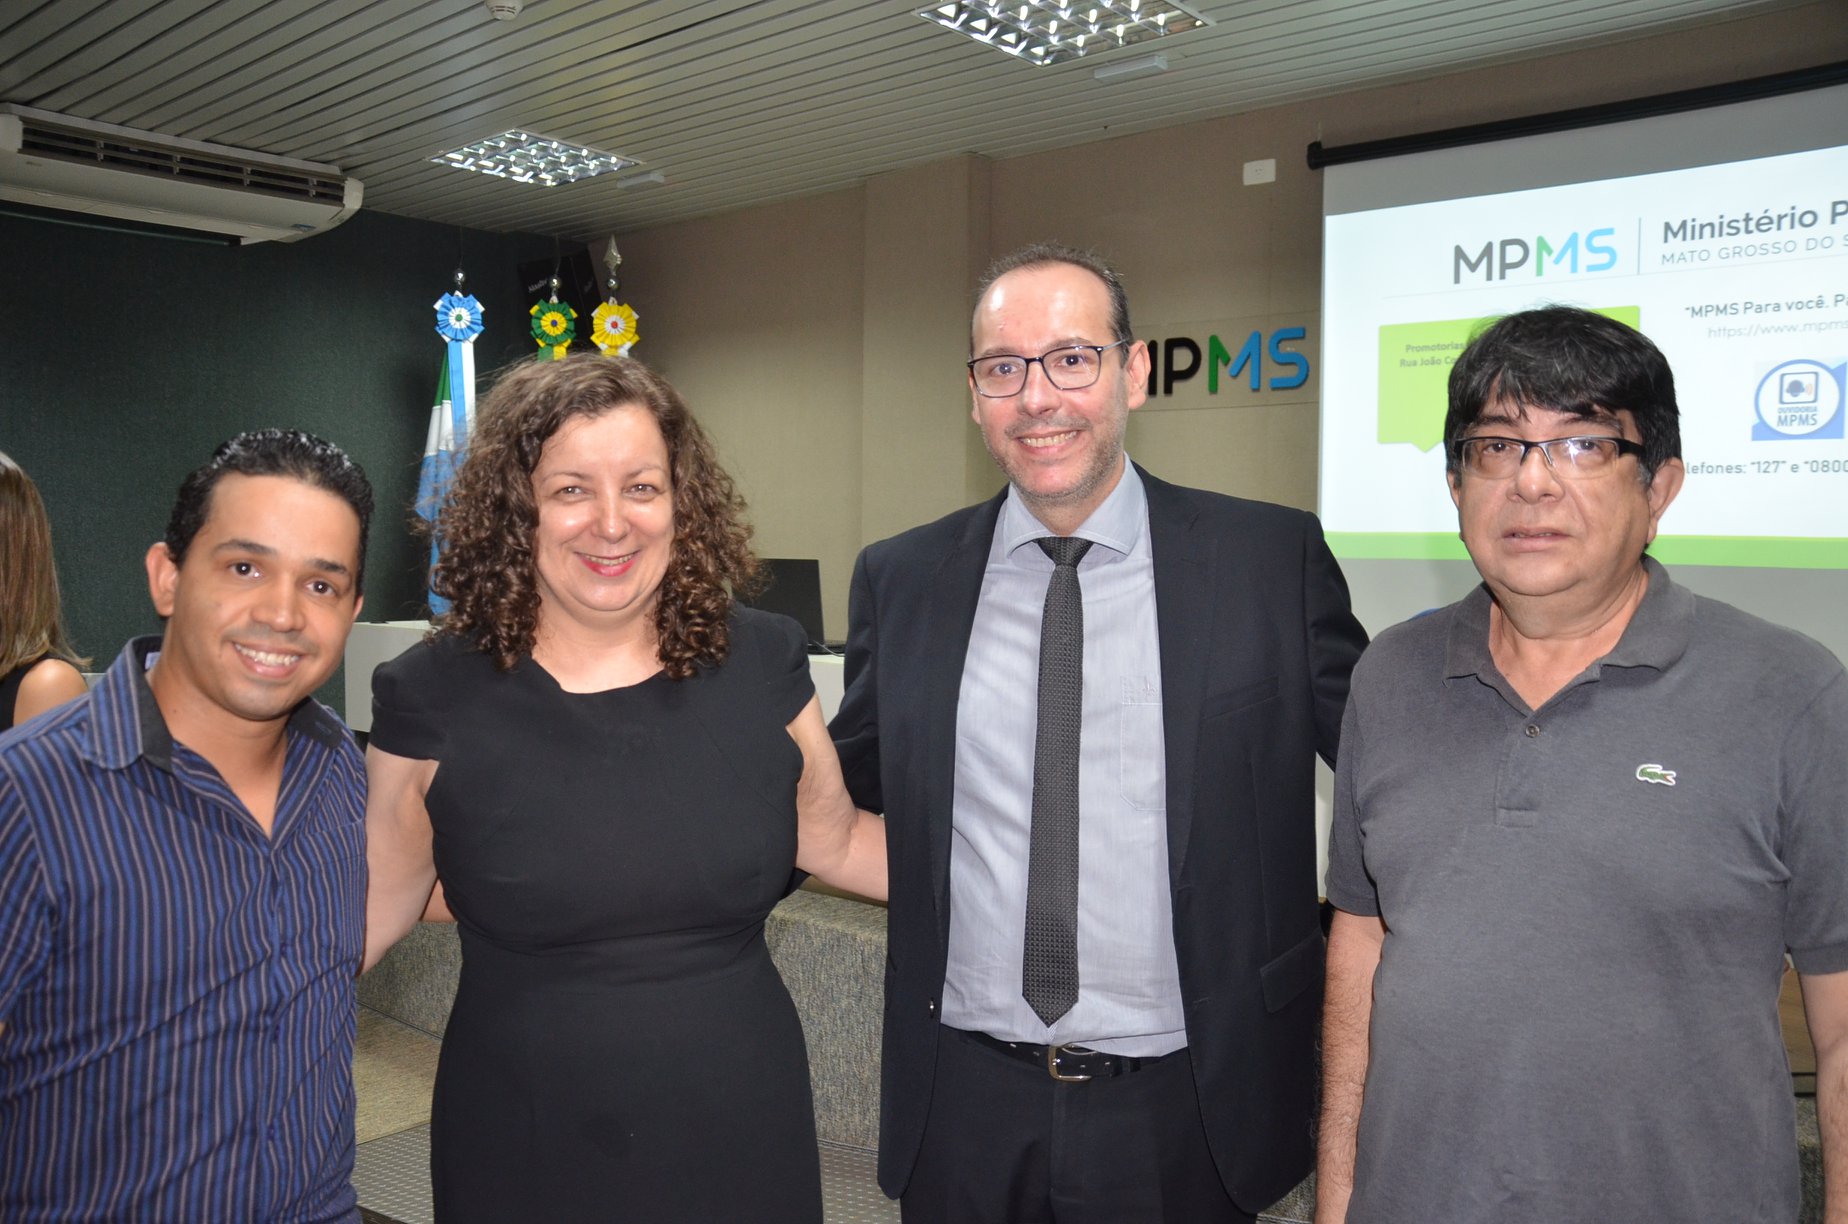 MPMS apresenta resultados do MP Social em Dourados e entrega certificados a entidades parceiras